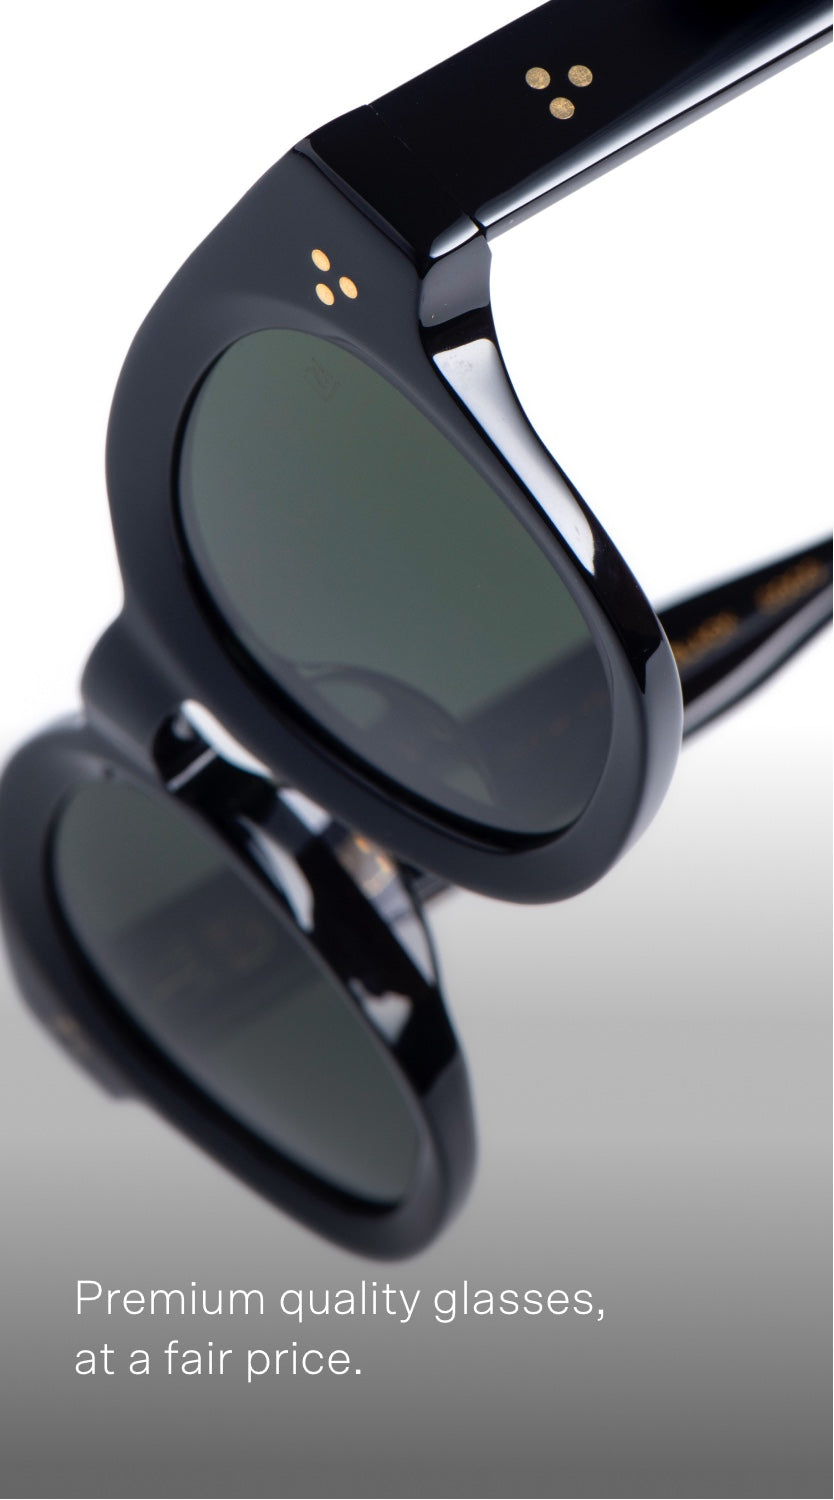 OLLU Bio-Acetate Sunglasses official Site | Made for you &  Mother Earth | ollu-shop.com